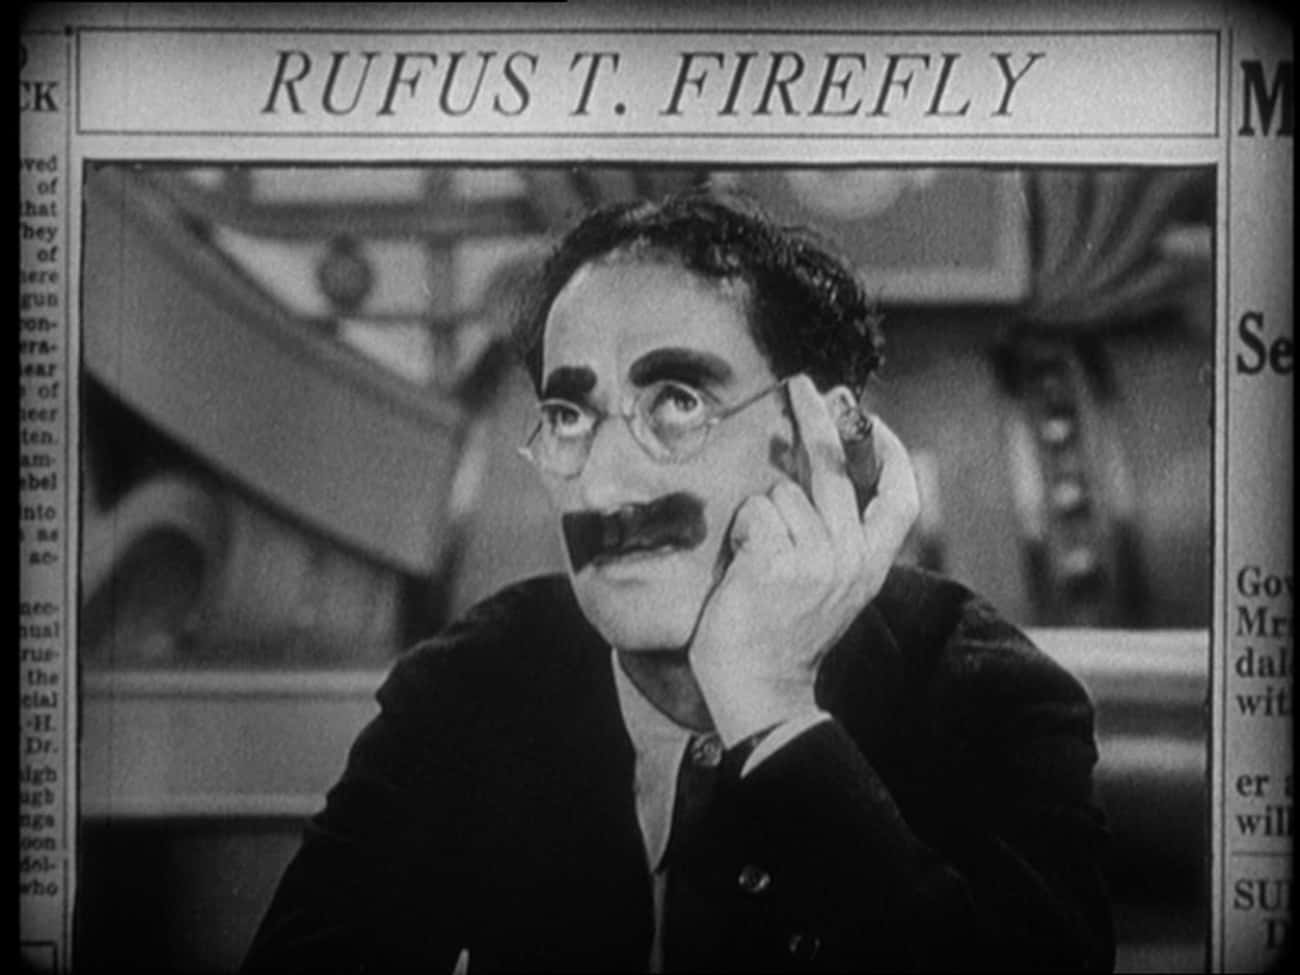 Rufus T. Firefly